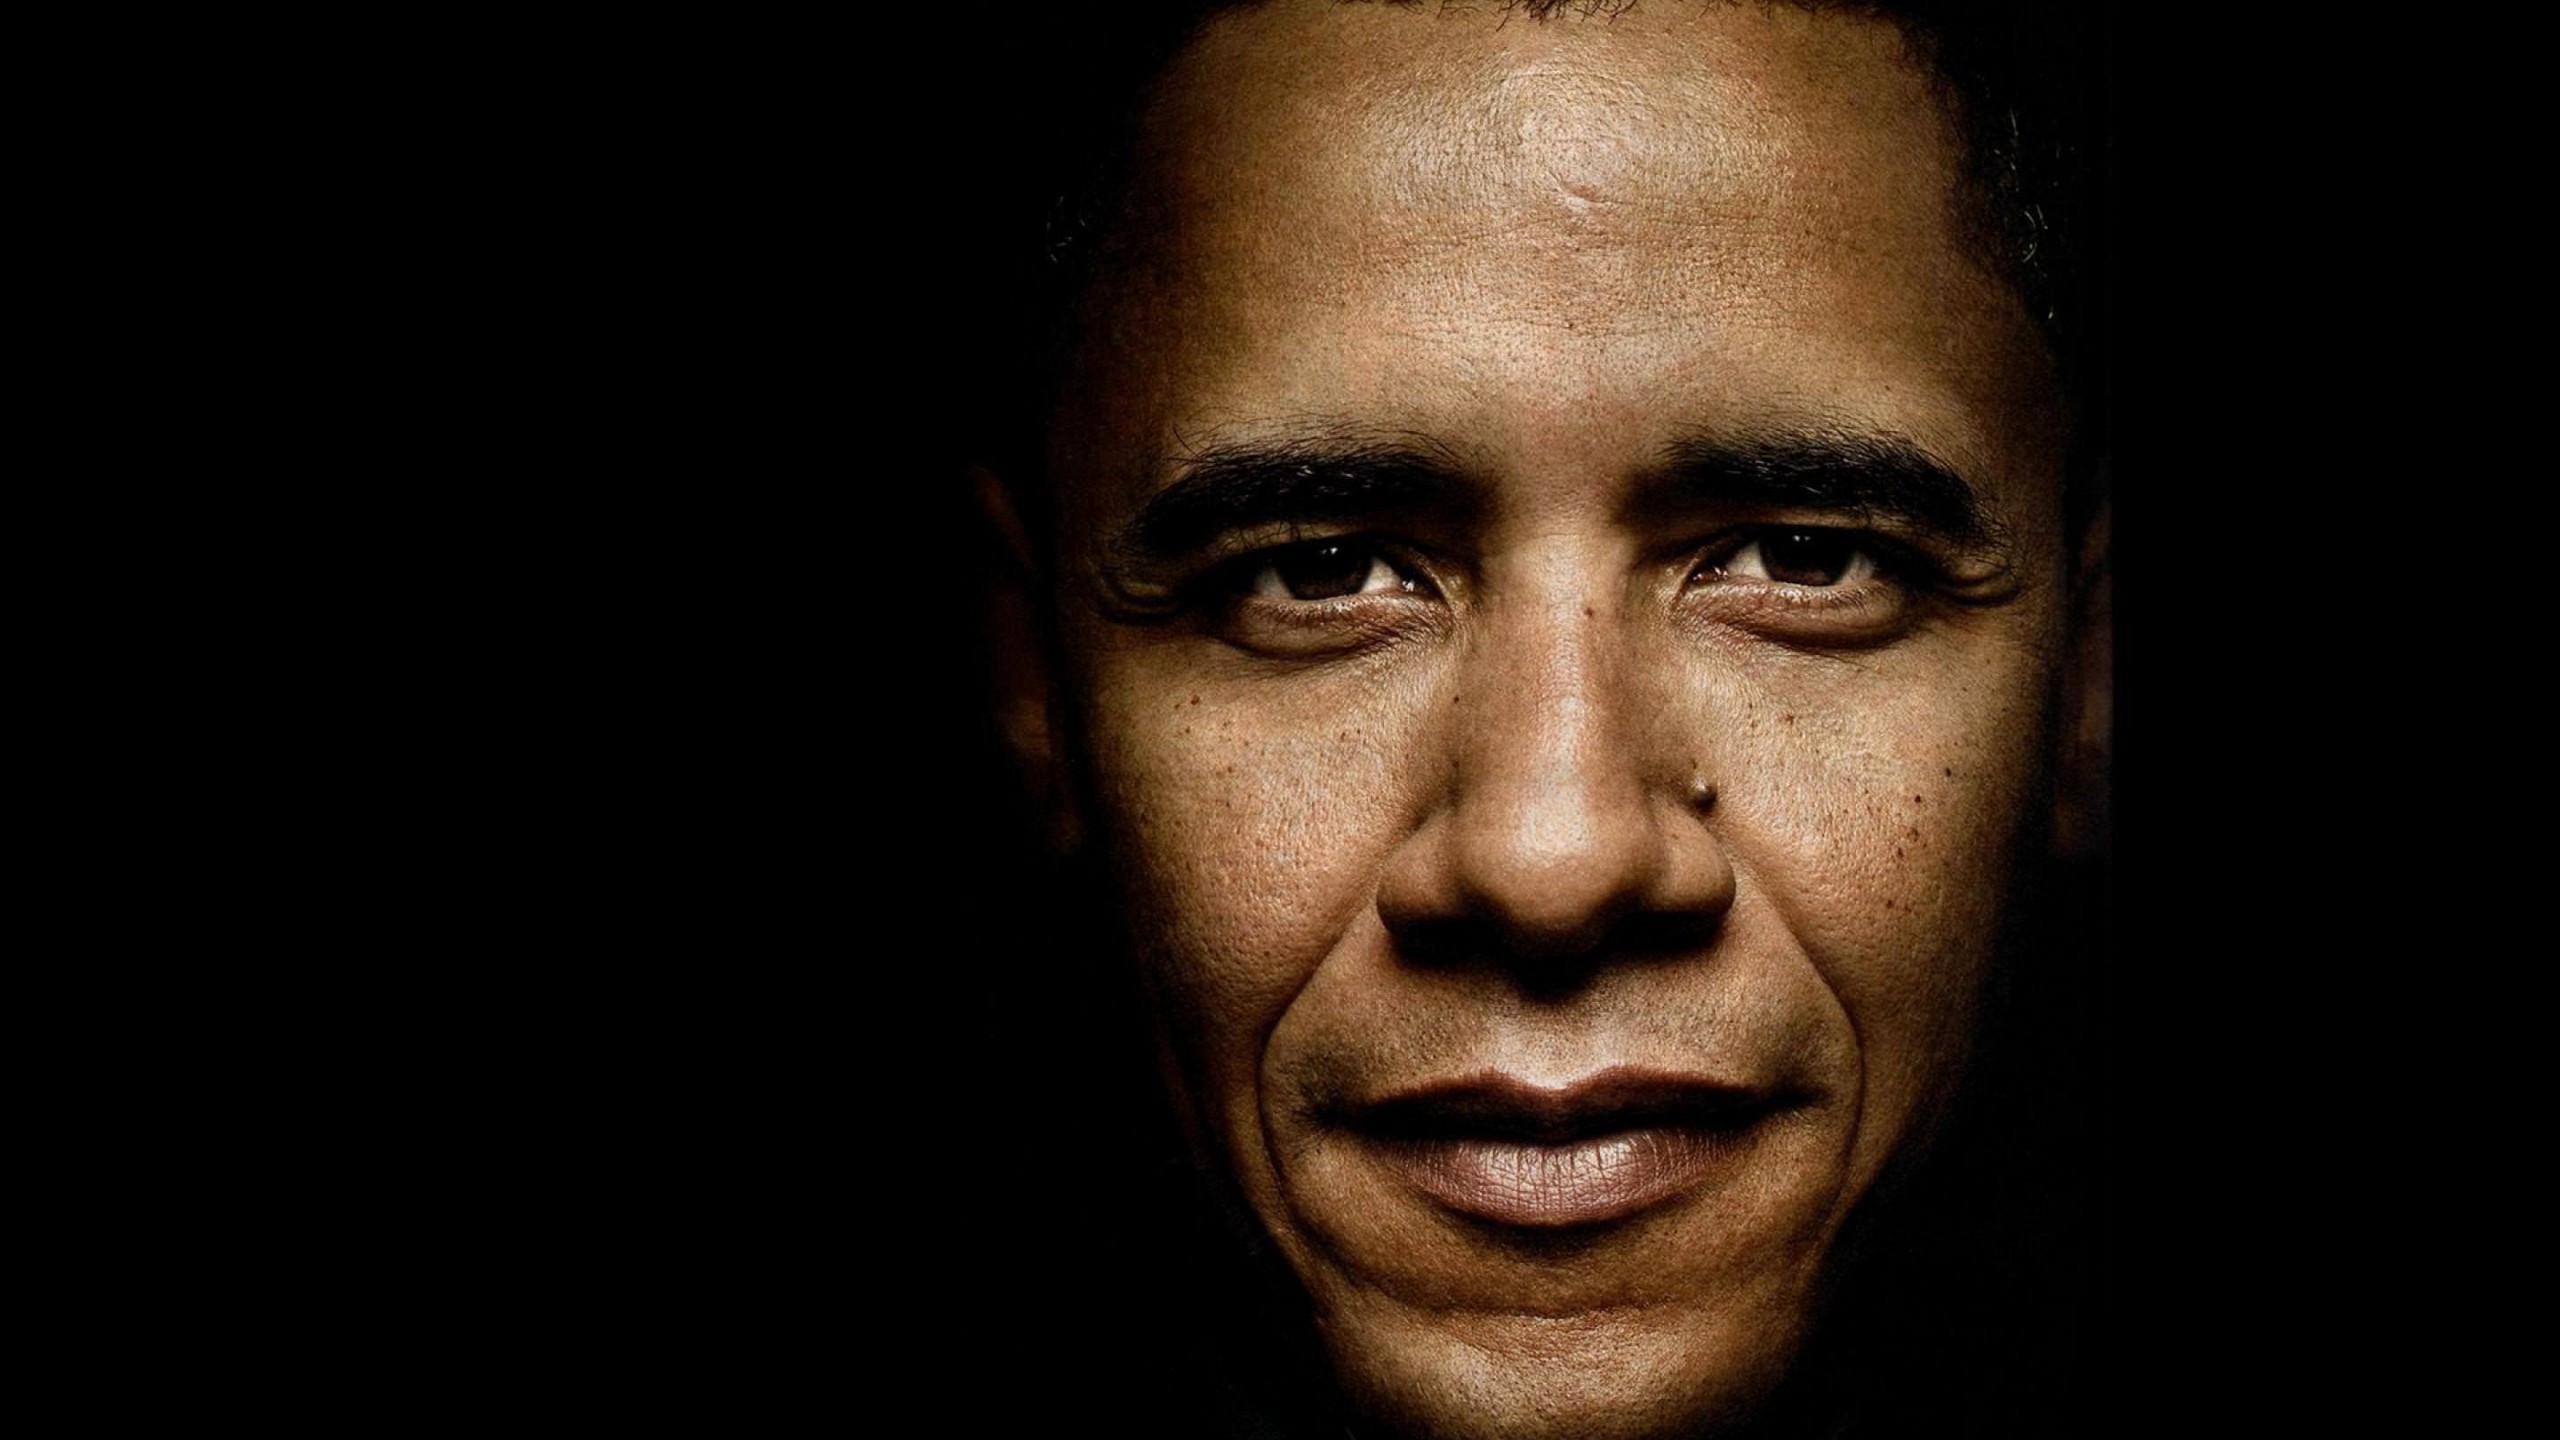 President Barack Obama Portrait Wallpaper for Desktop 2560x1440